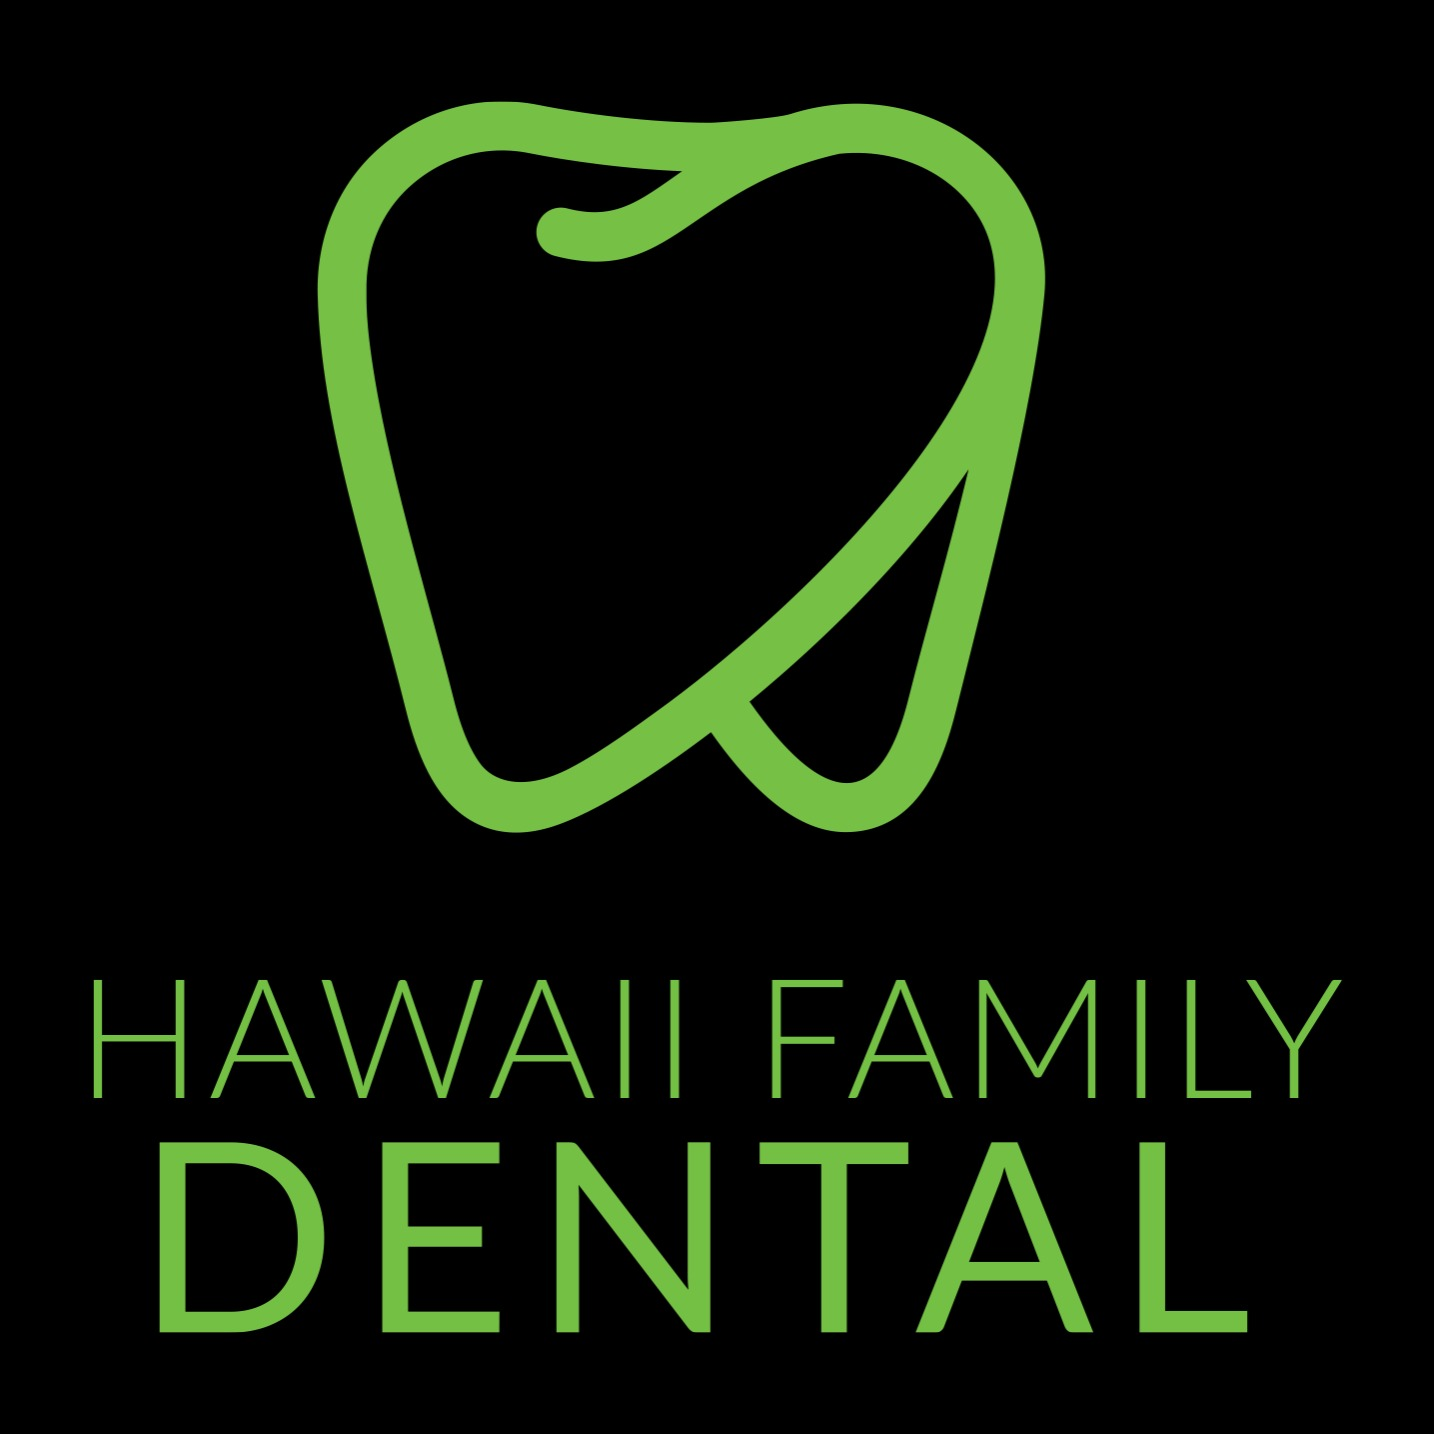 Hawaii Family Dental – Honolulu - Honolulu, HI 96813 - (808)748-4973 | ShowMeLocal.com